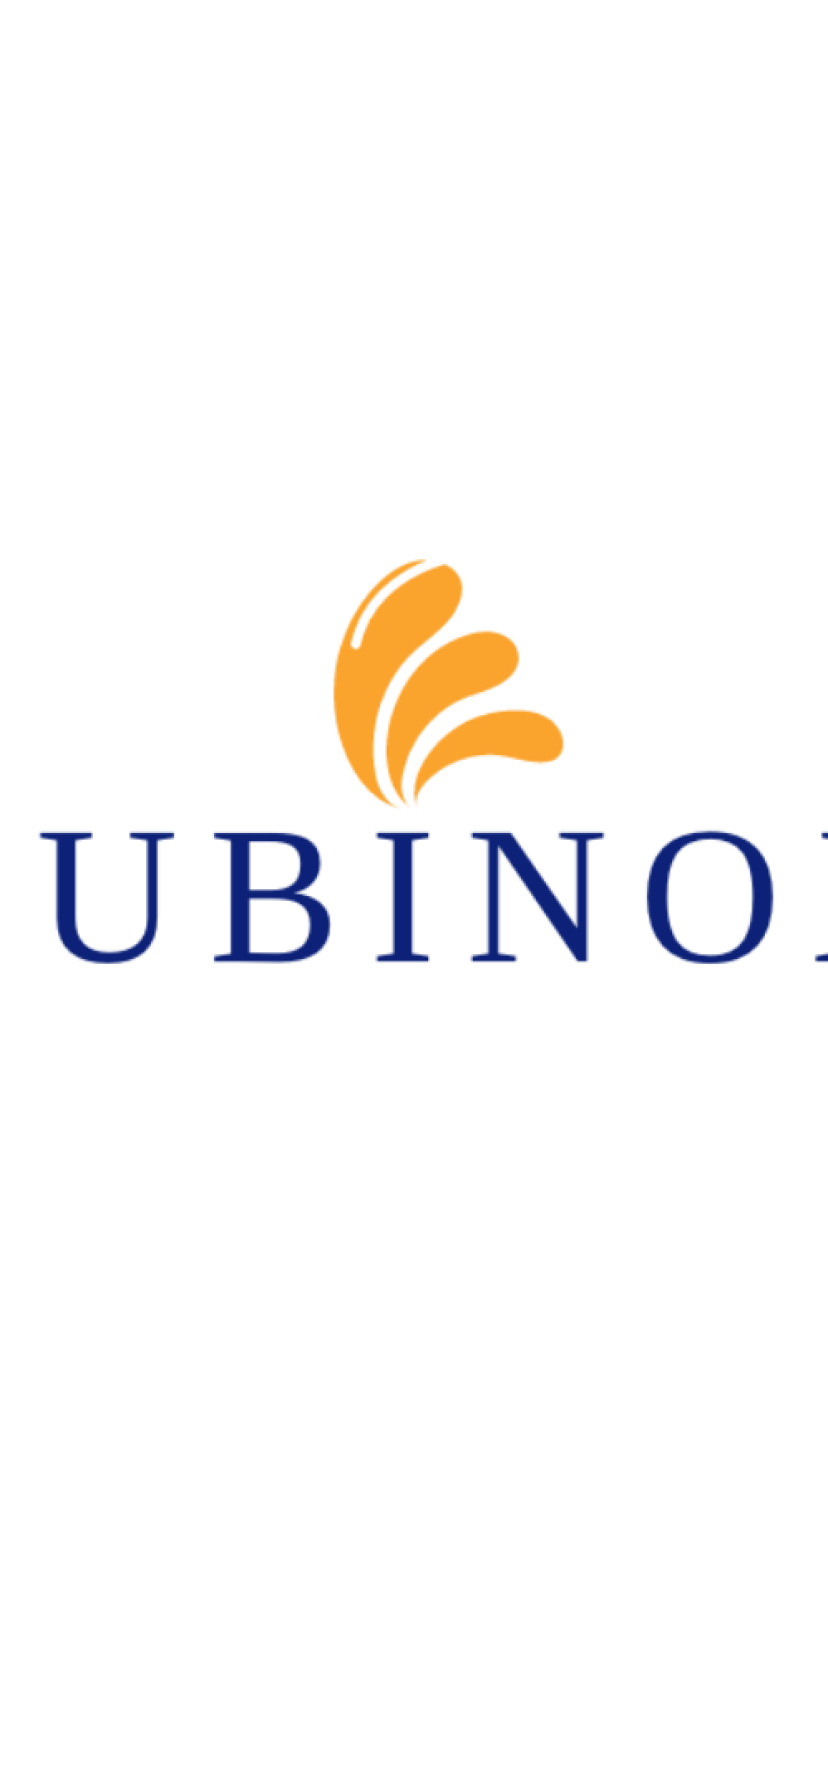 Lubinox.com domain name for sale